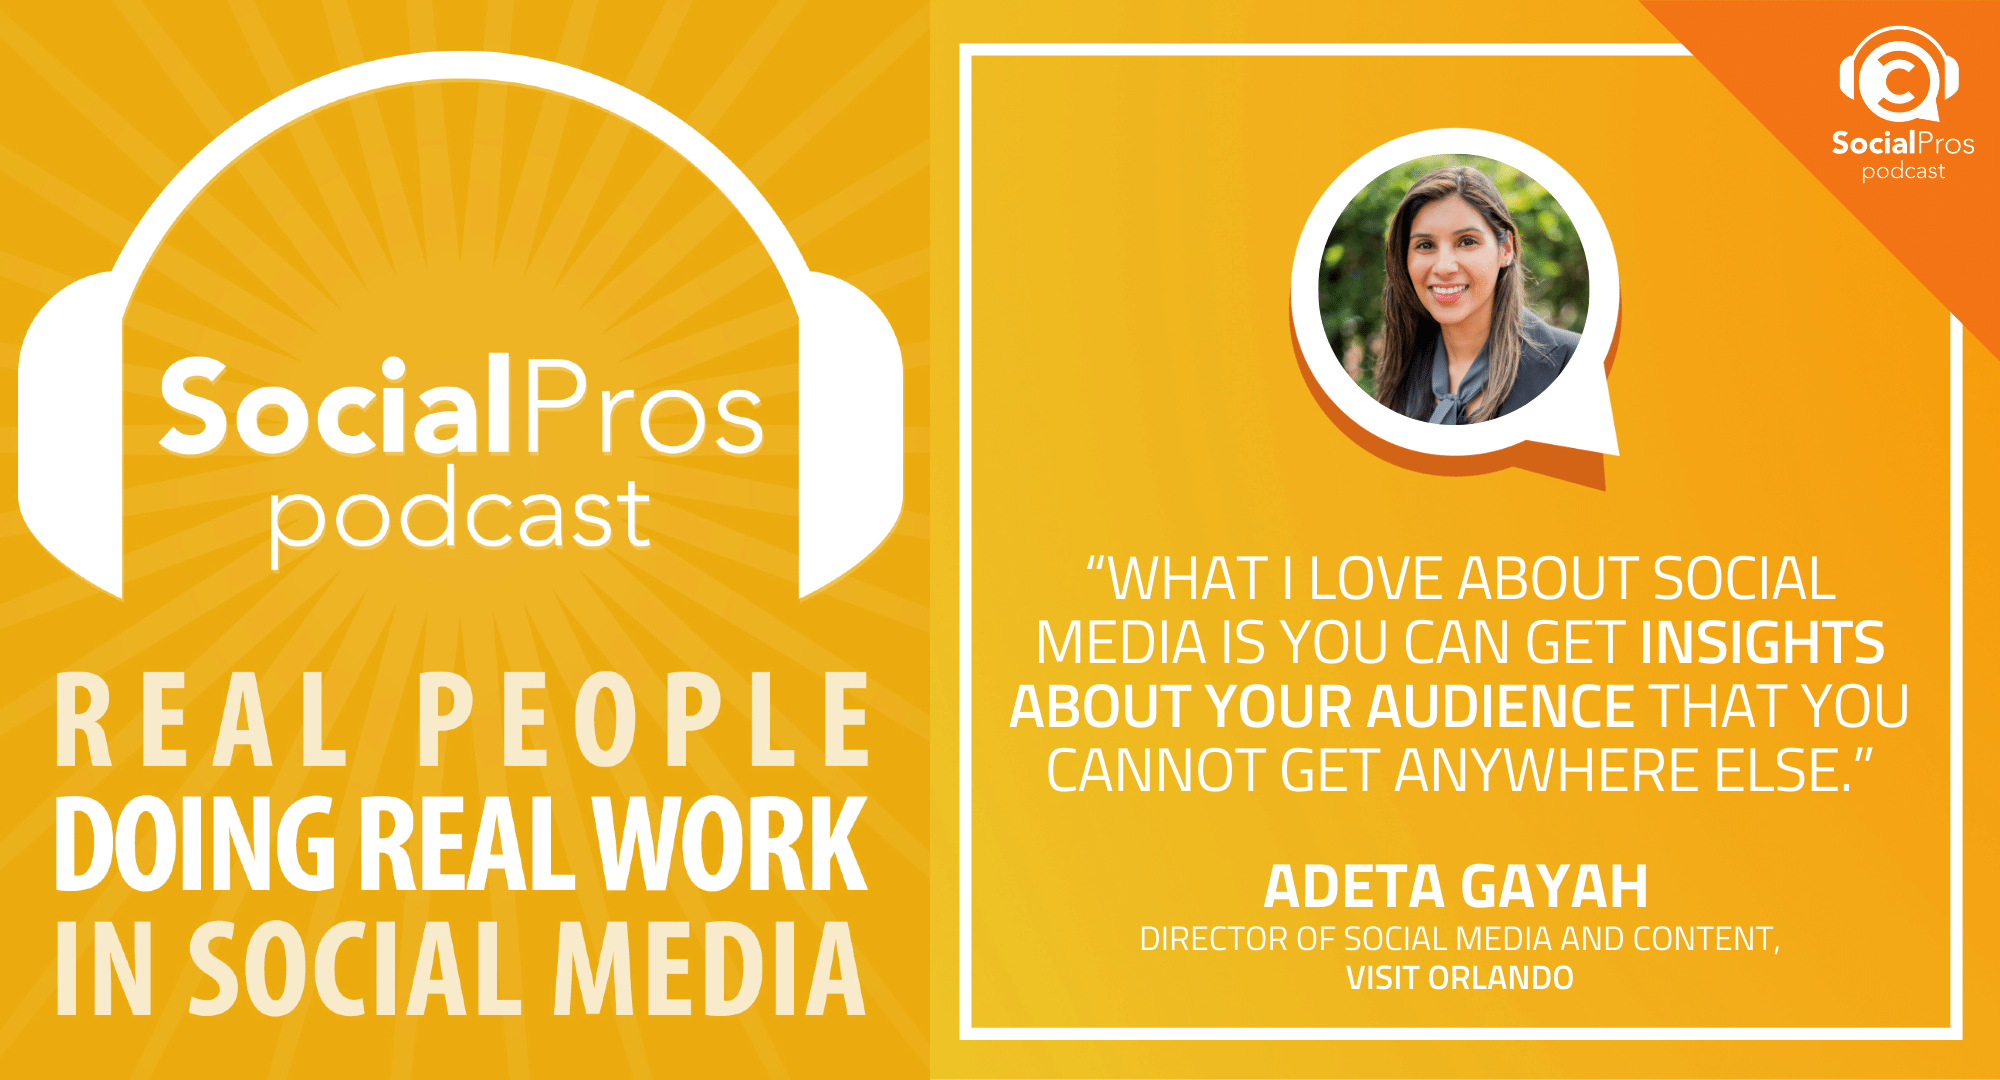 check out the recent episode Social Pros, featuring Visit Orlando's Adeta Gayah.